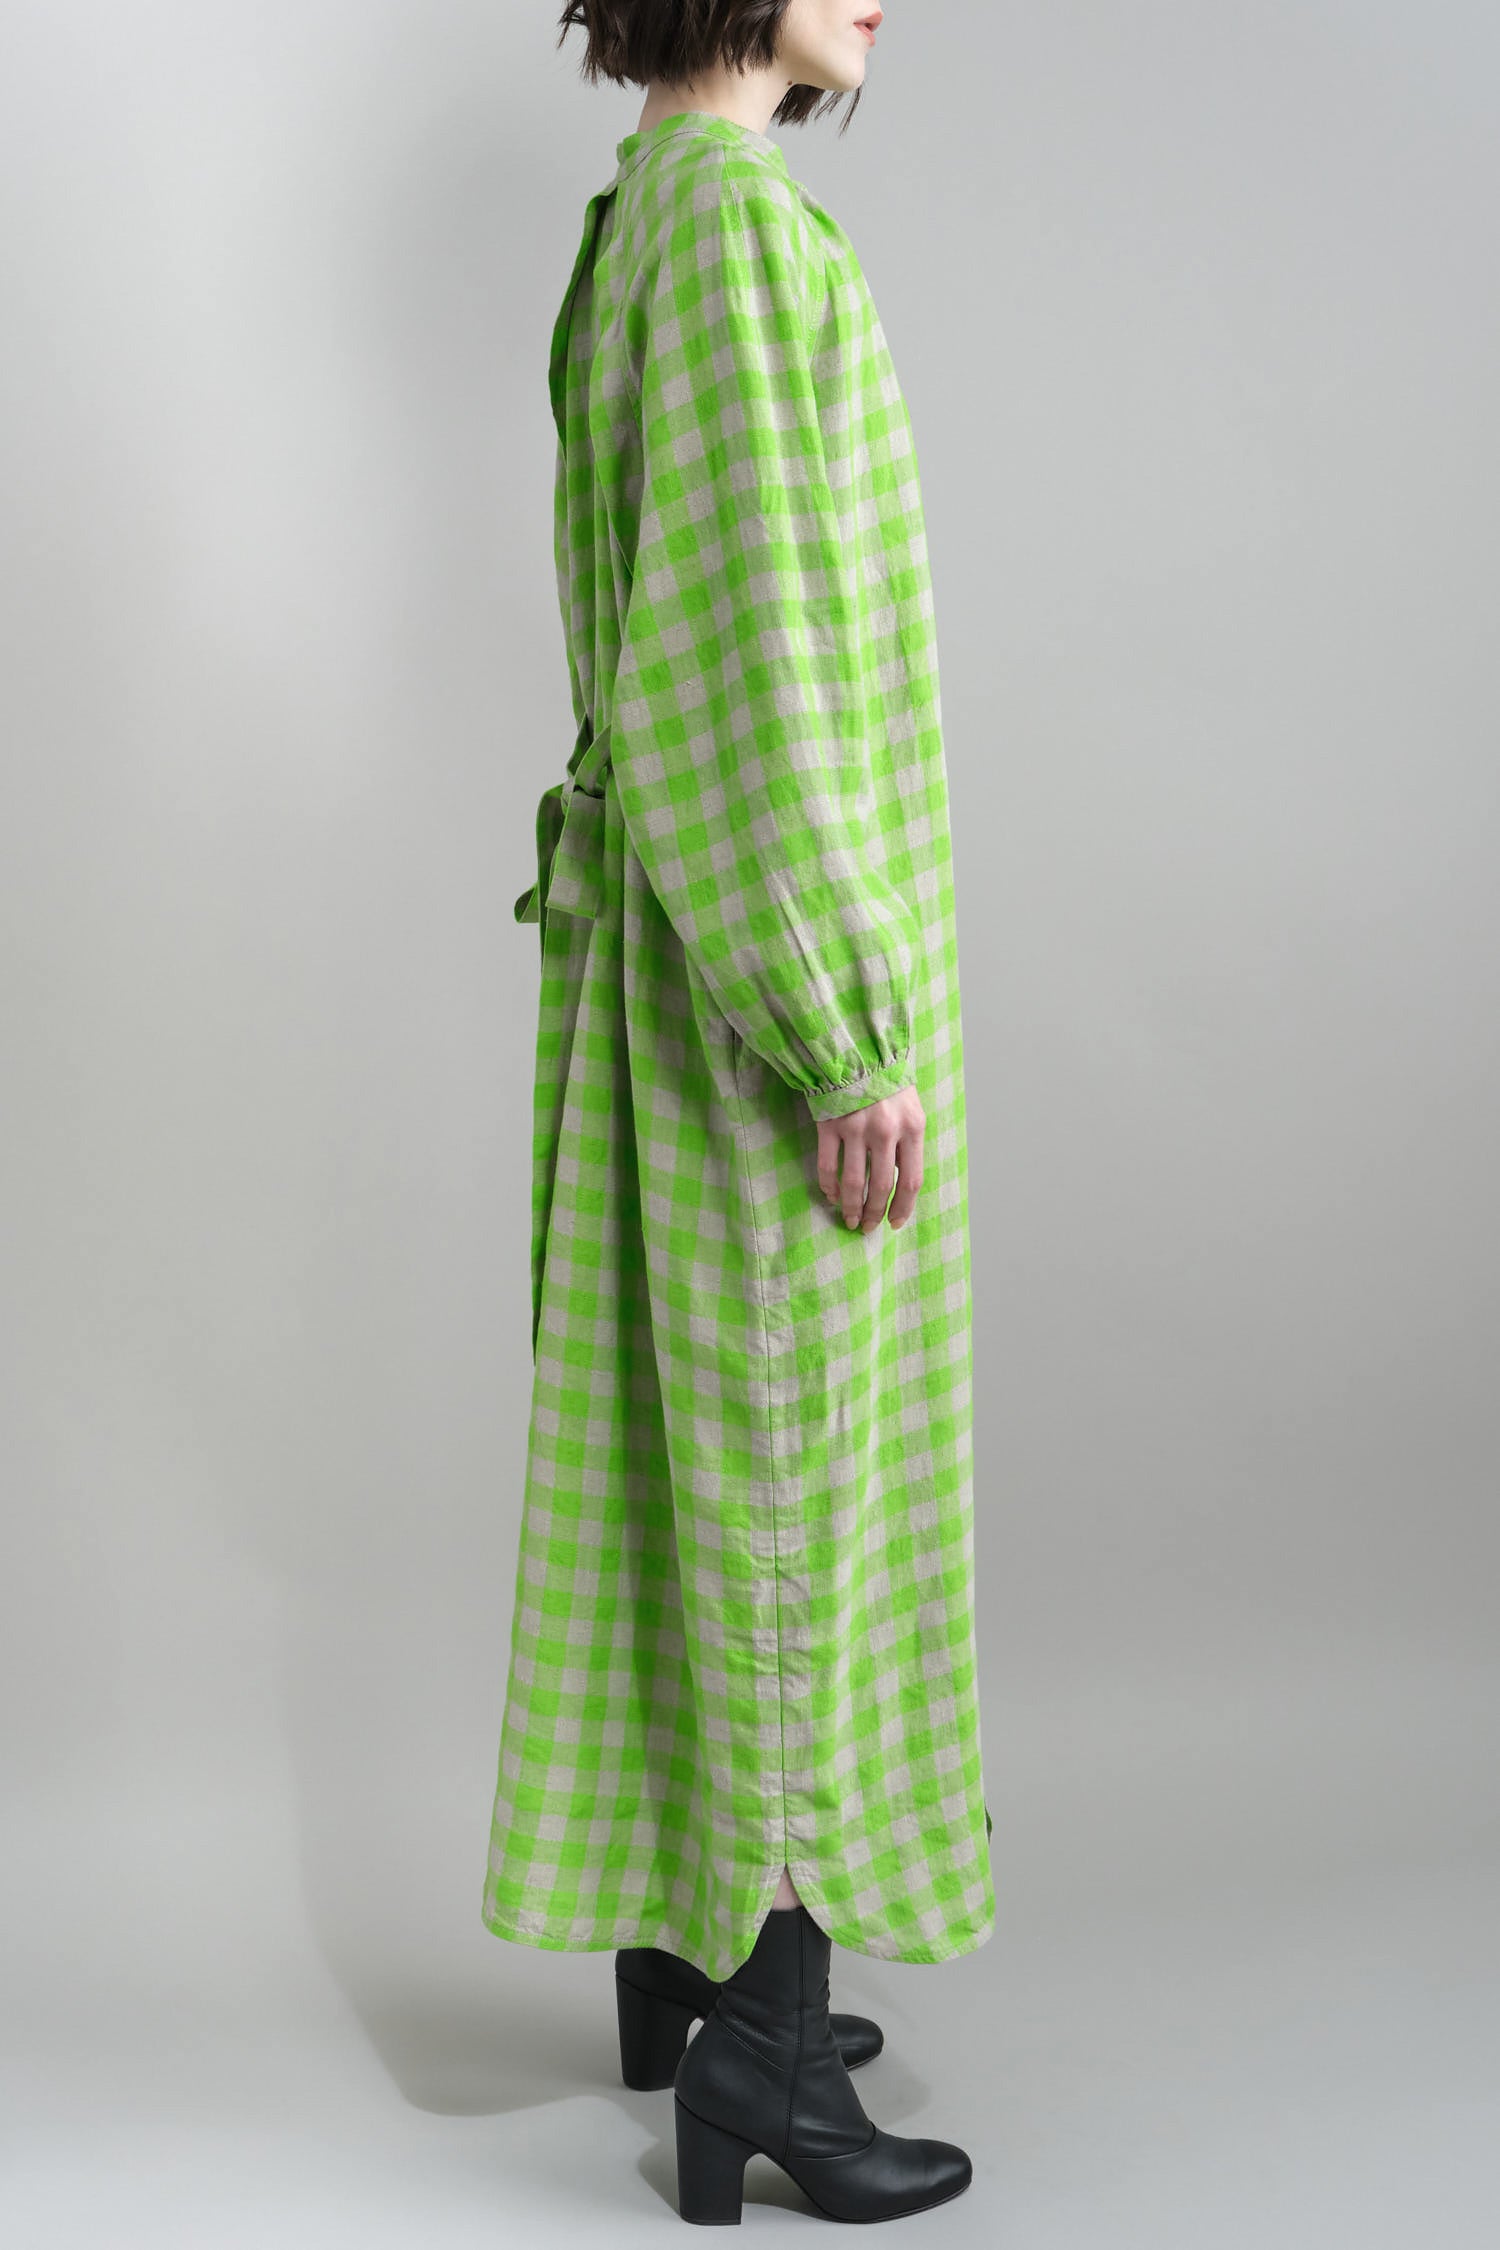 Side of Leaf Dress in Spring Green Checks